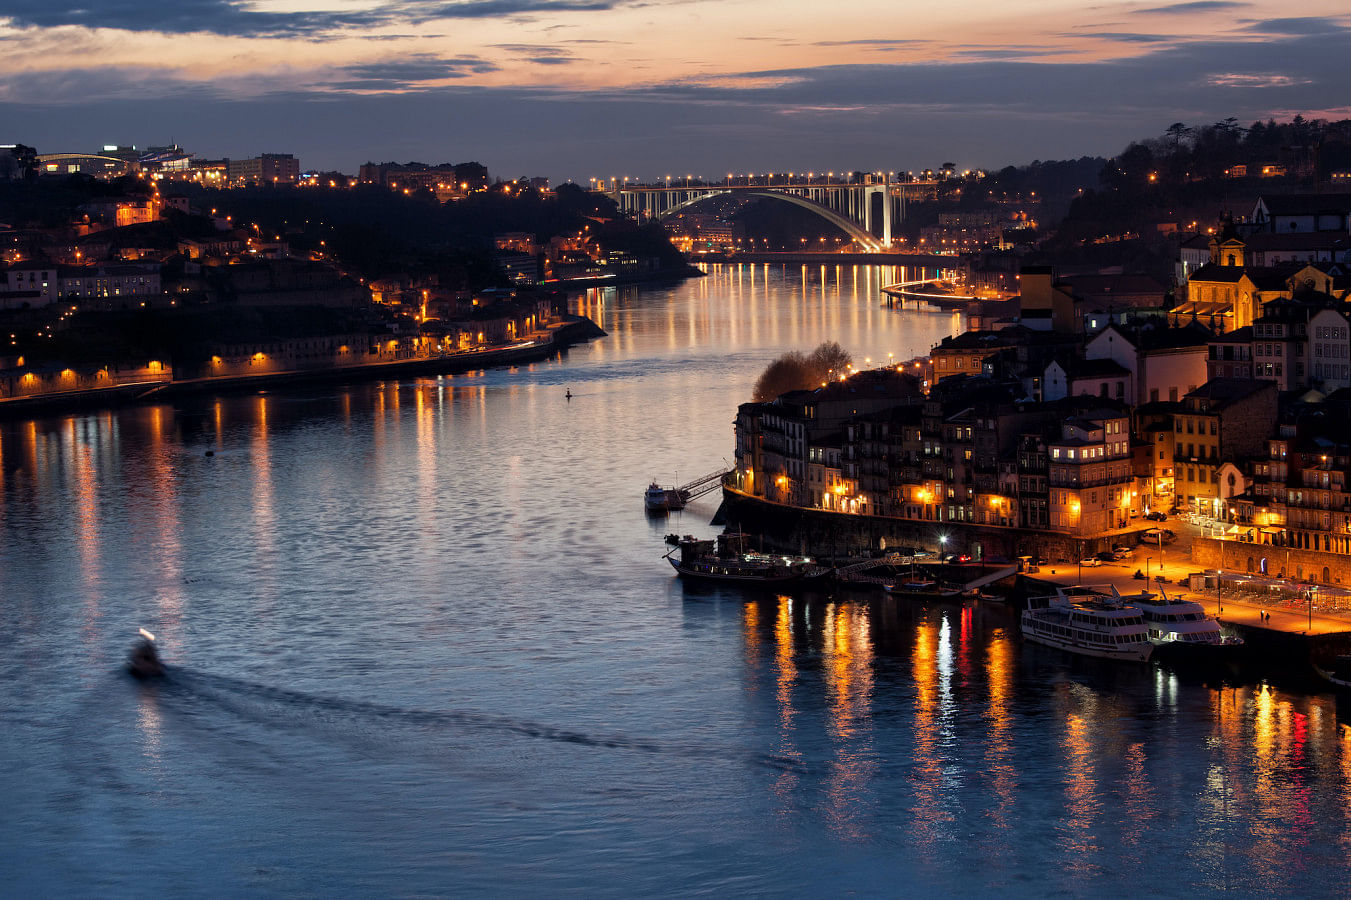 Hyr en båt i Dourofloden